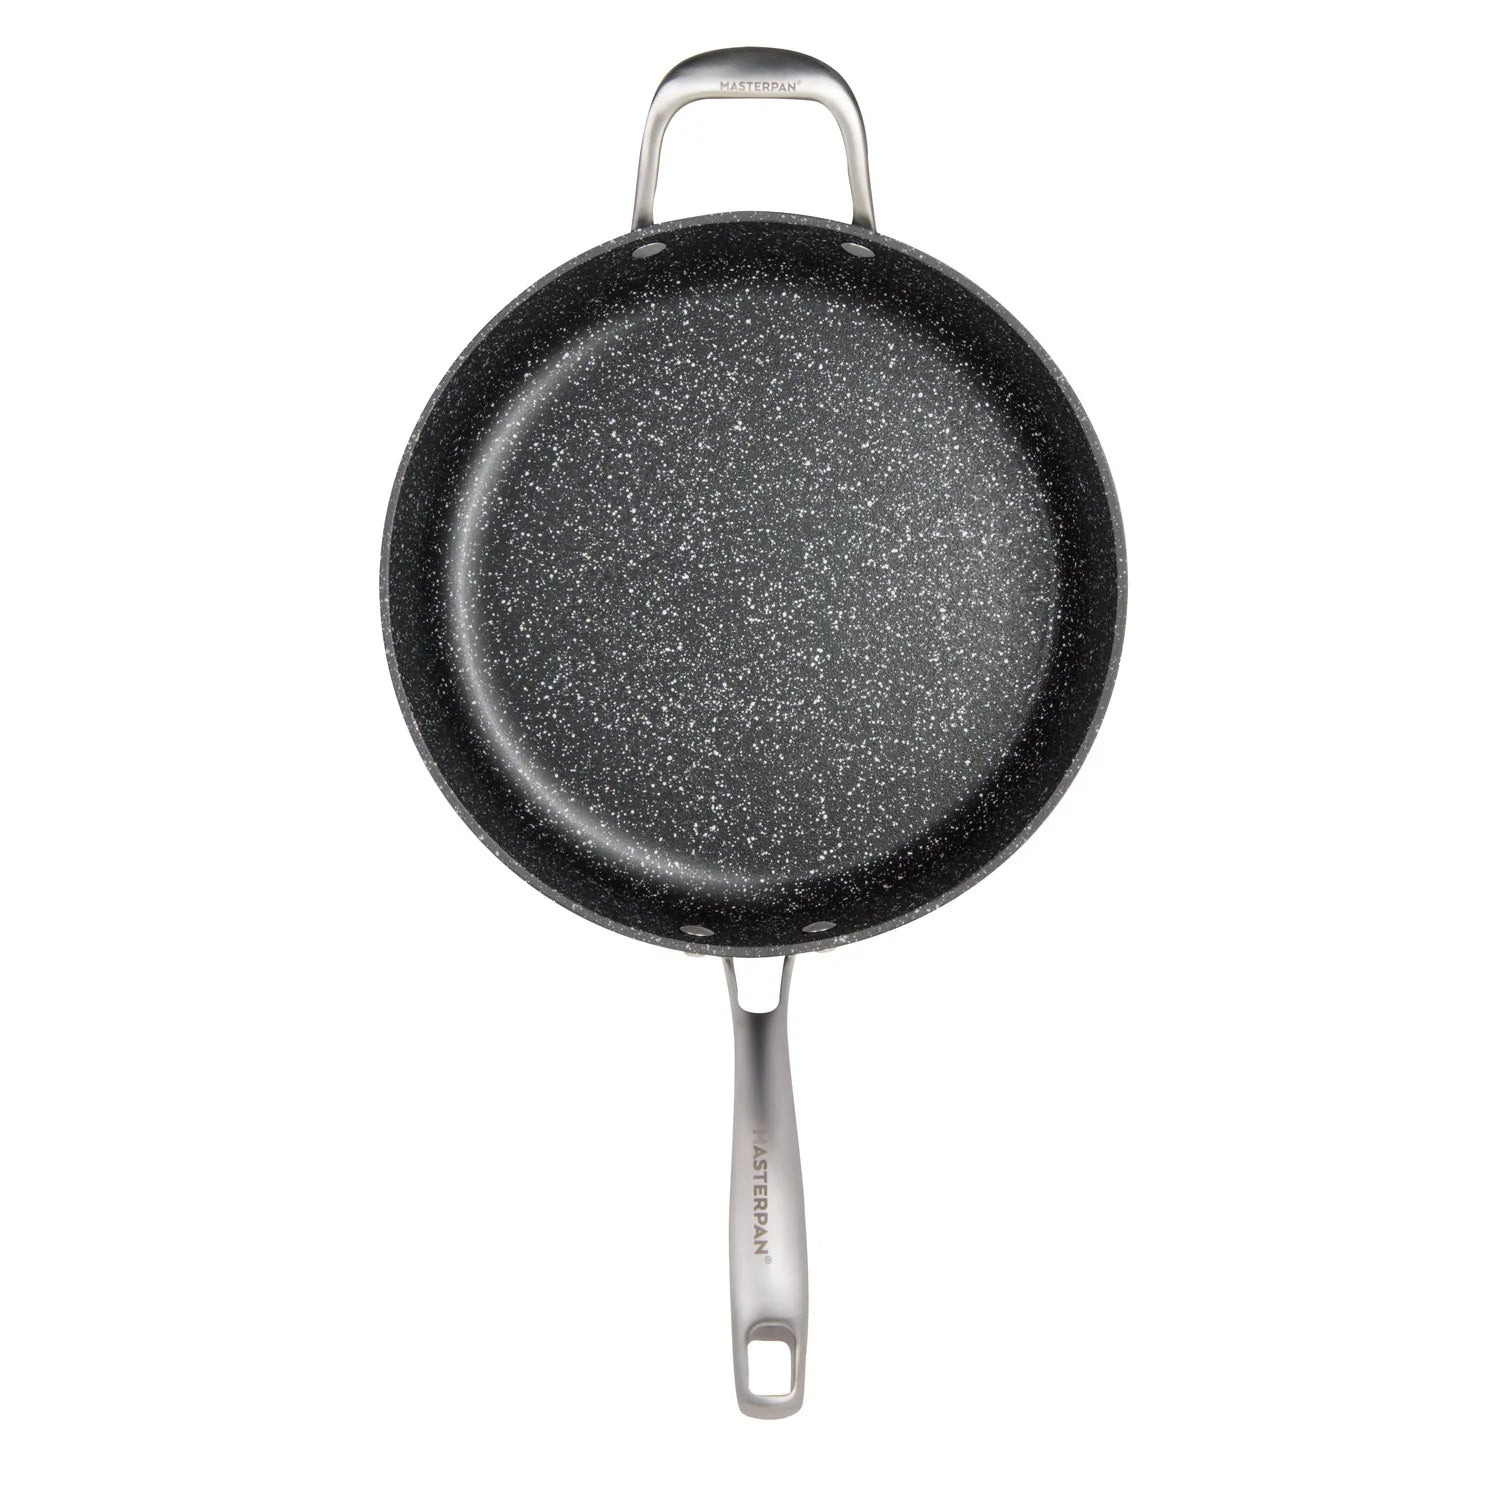 MASTERPAN Premium Series 11” 5 QT. Saute Pan With Glass Lid Non-stick Cast Aluminum Granite Look Finish